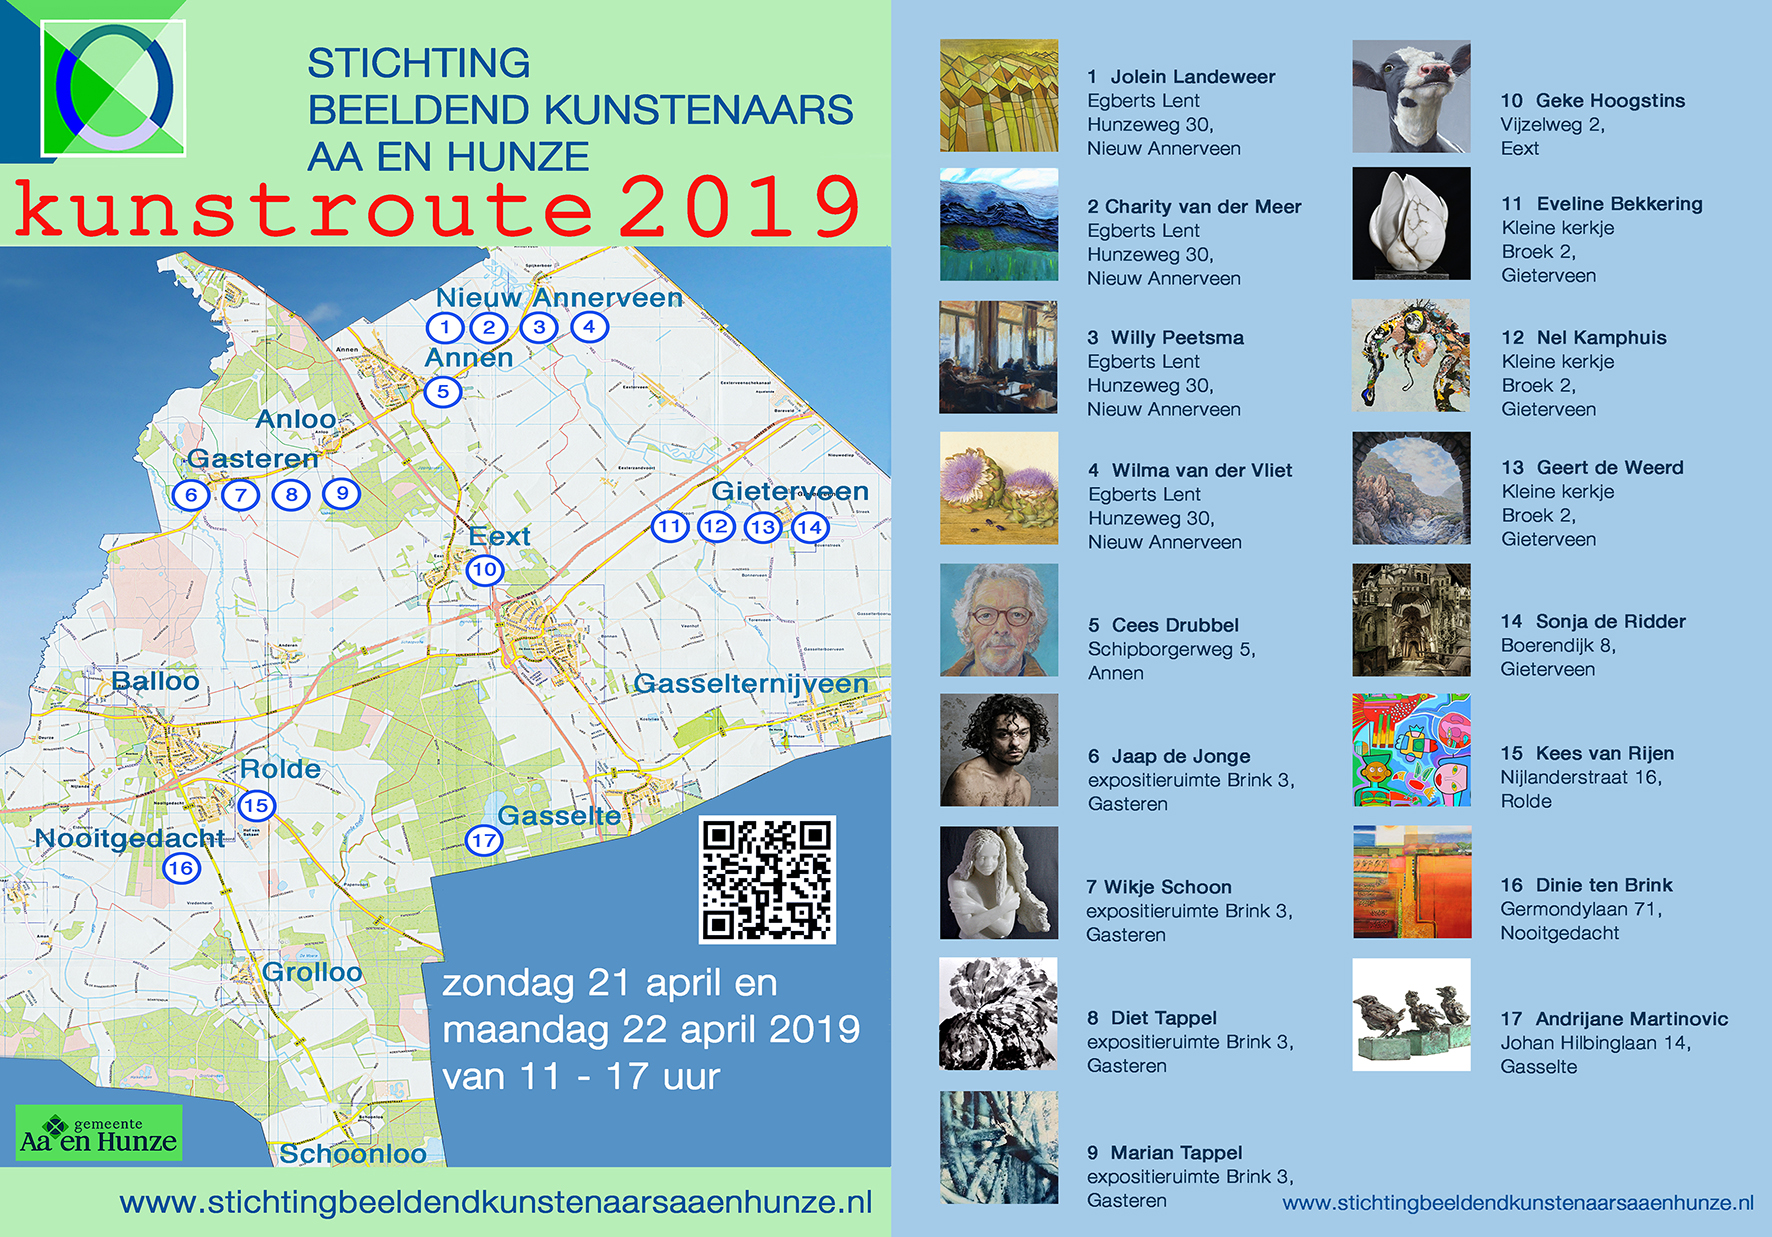 //gekehoogstins.nl/wp-content/uploads/2019/04/kunstroute-2019-voor-web.jpg